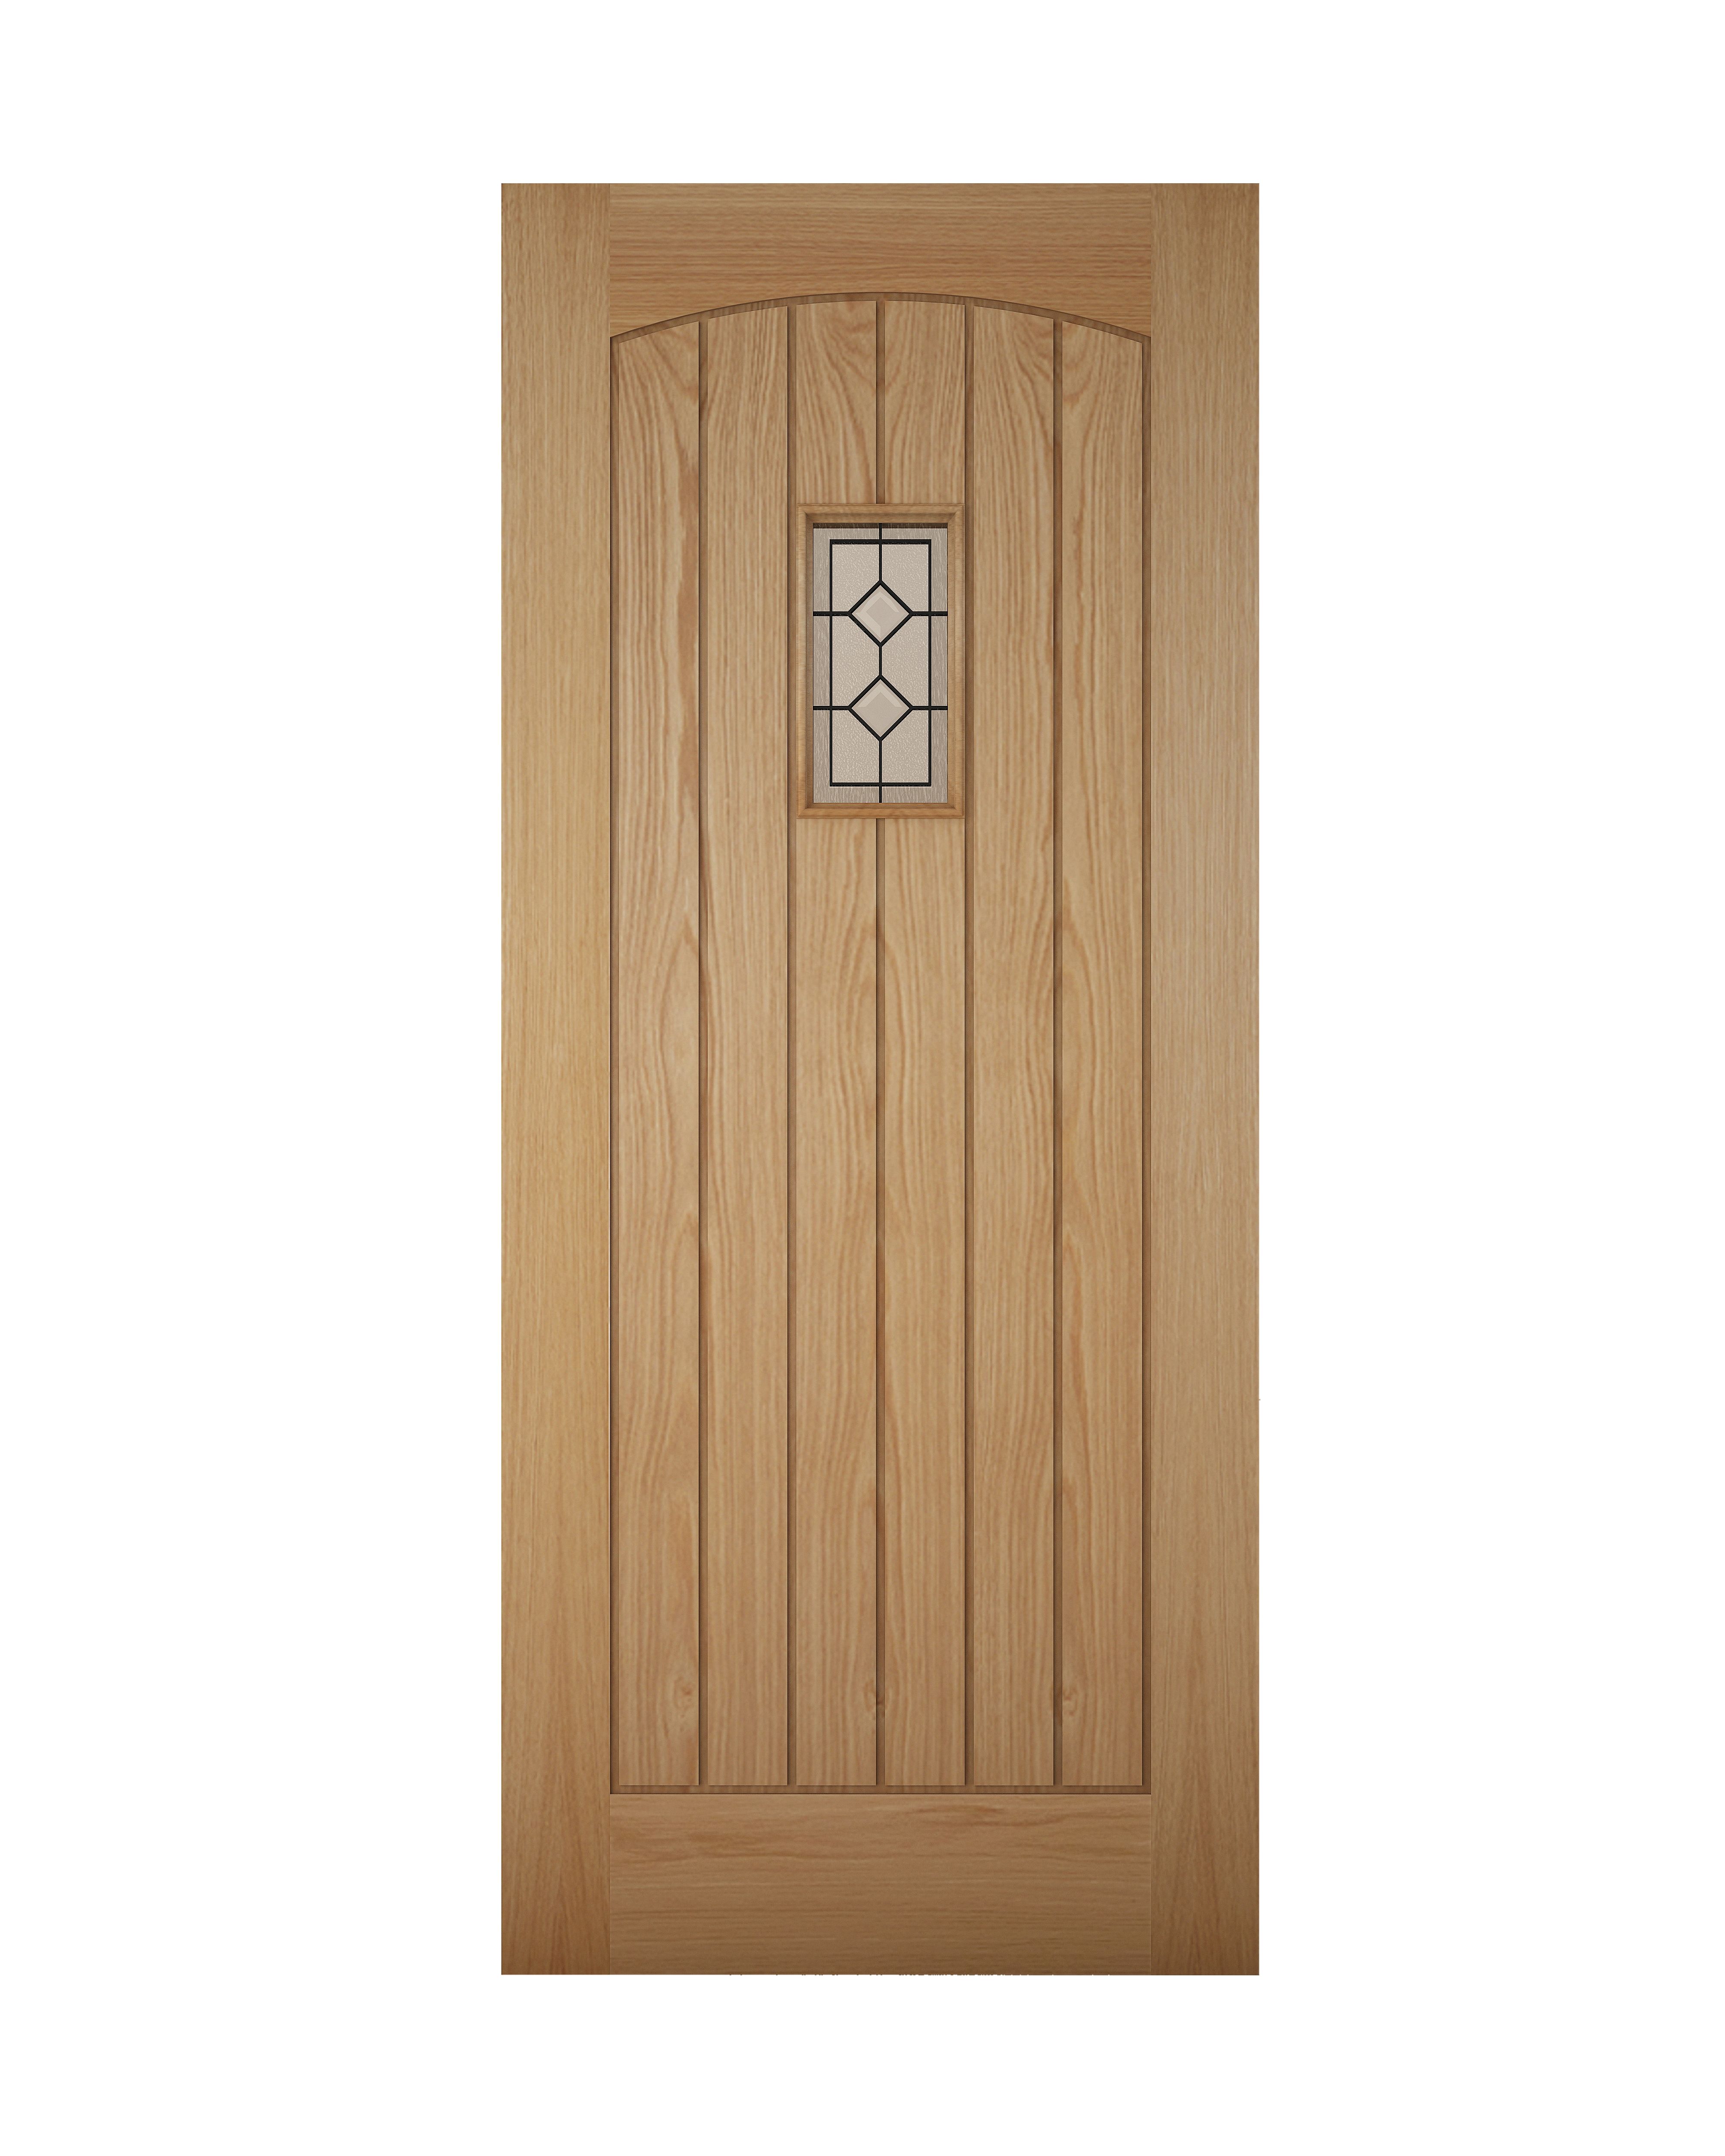 Geom Diamond bevel Leaded Glazed Cottage Wooden White oak veneer External Front door, (H)1981mm (W)762mm